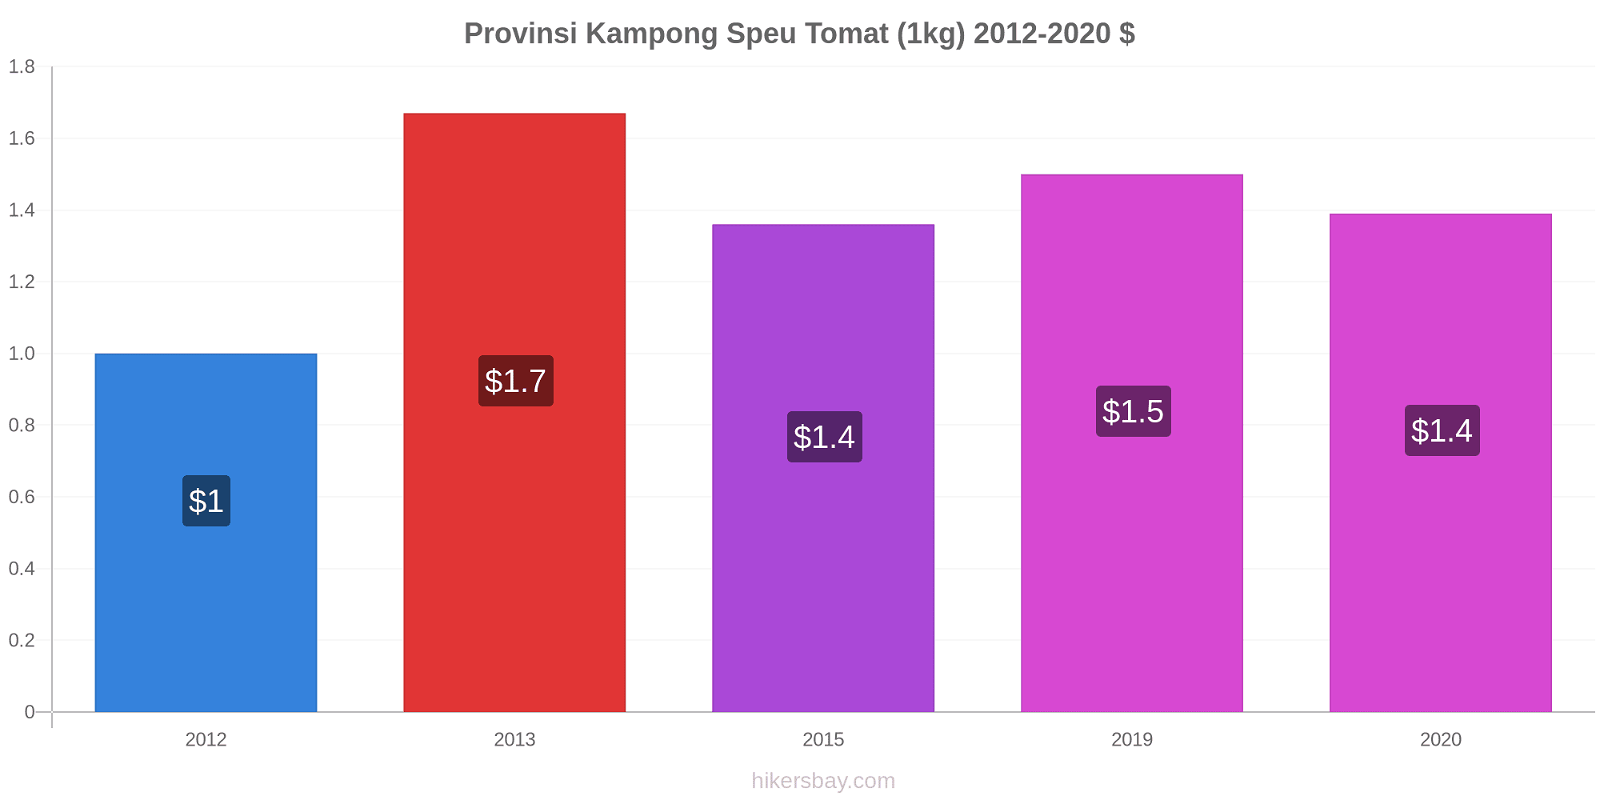 Provinsi Kampong Speu perubahan harga Tomat (1kg) hikersbay.com